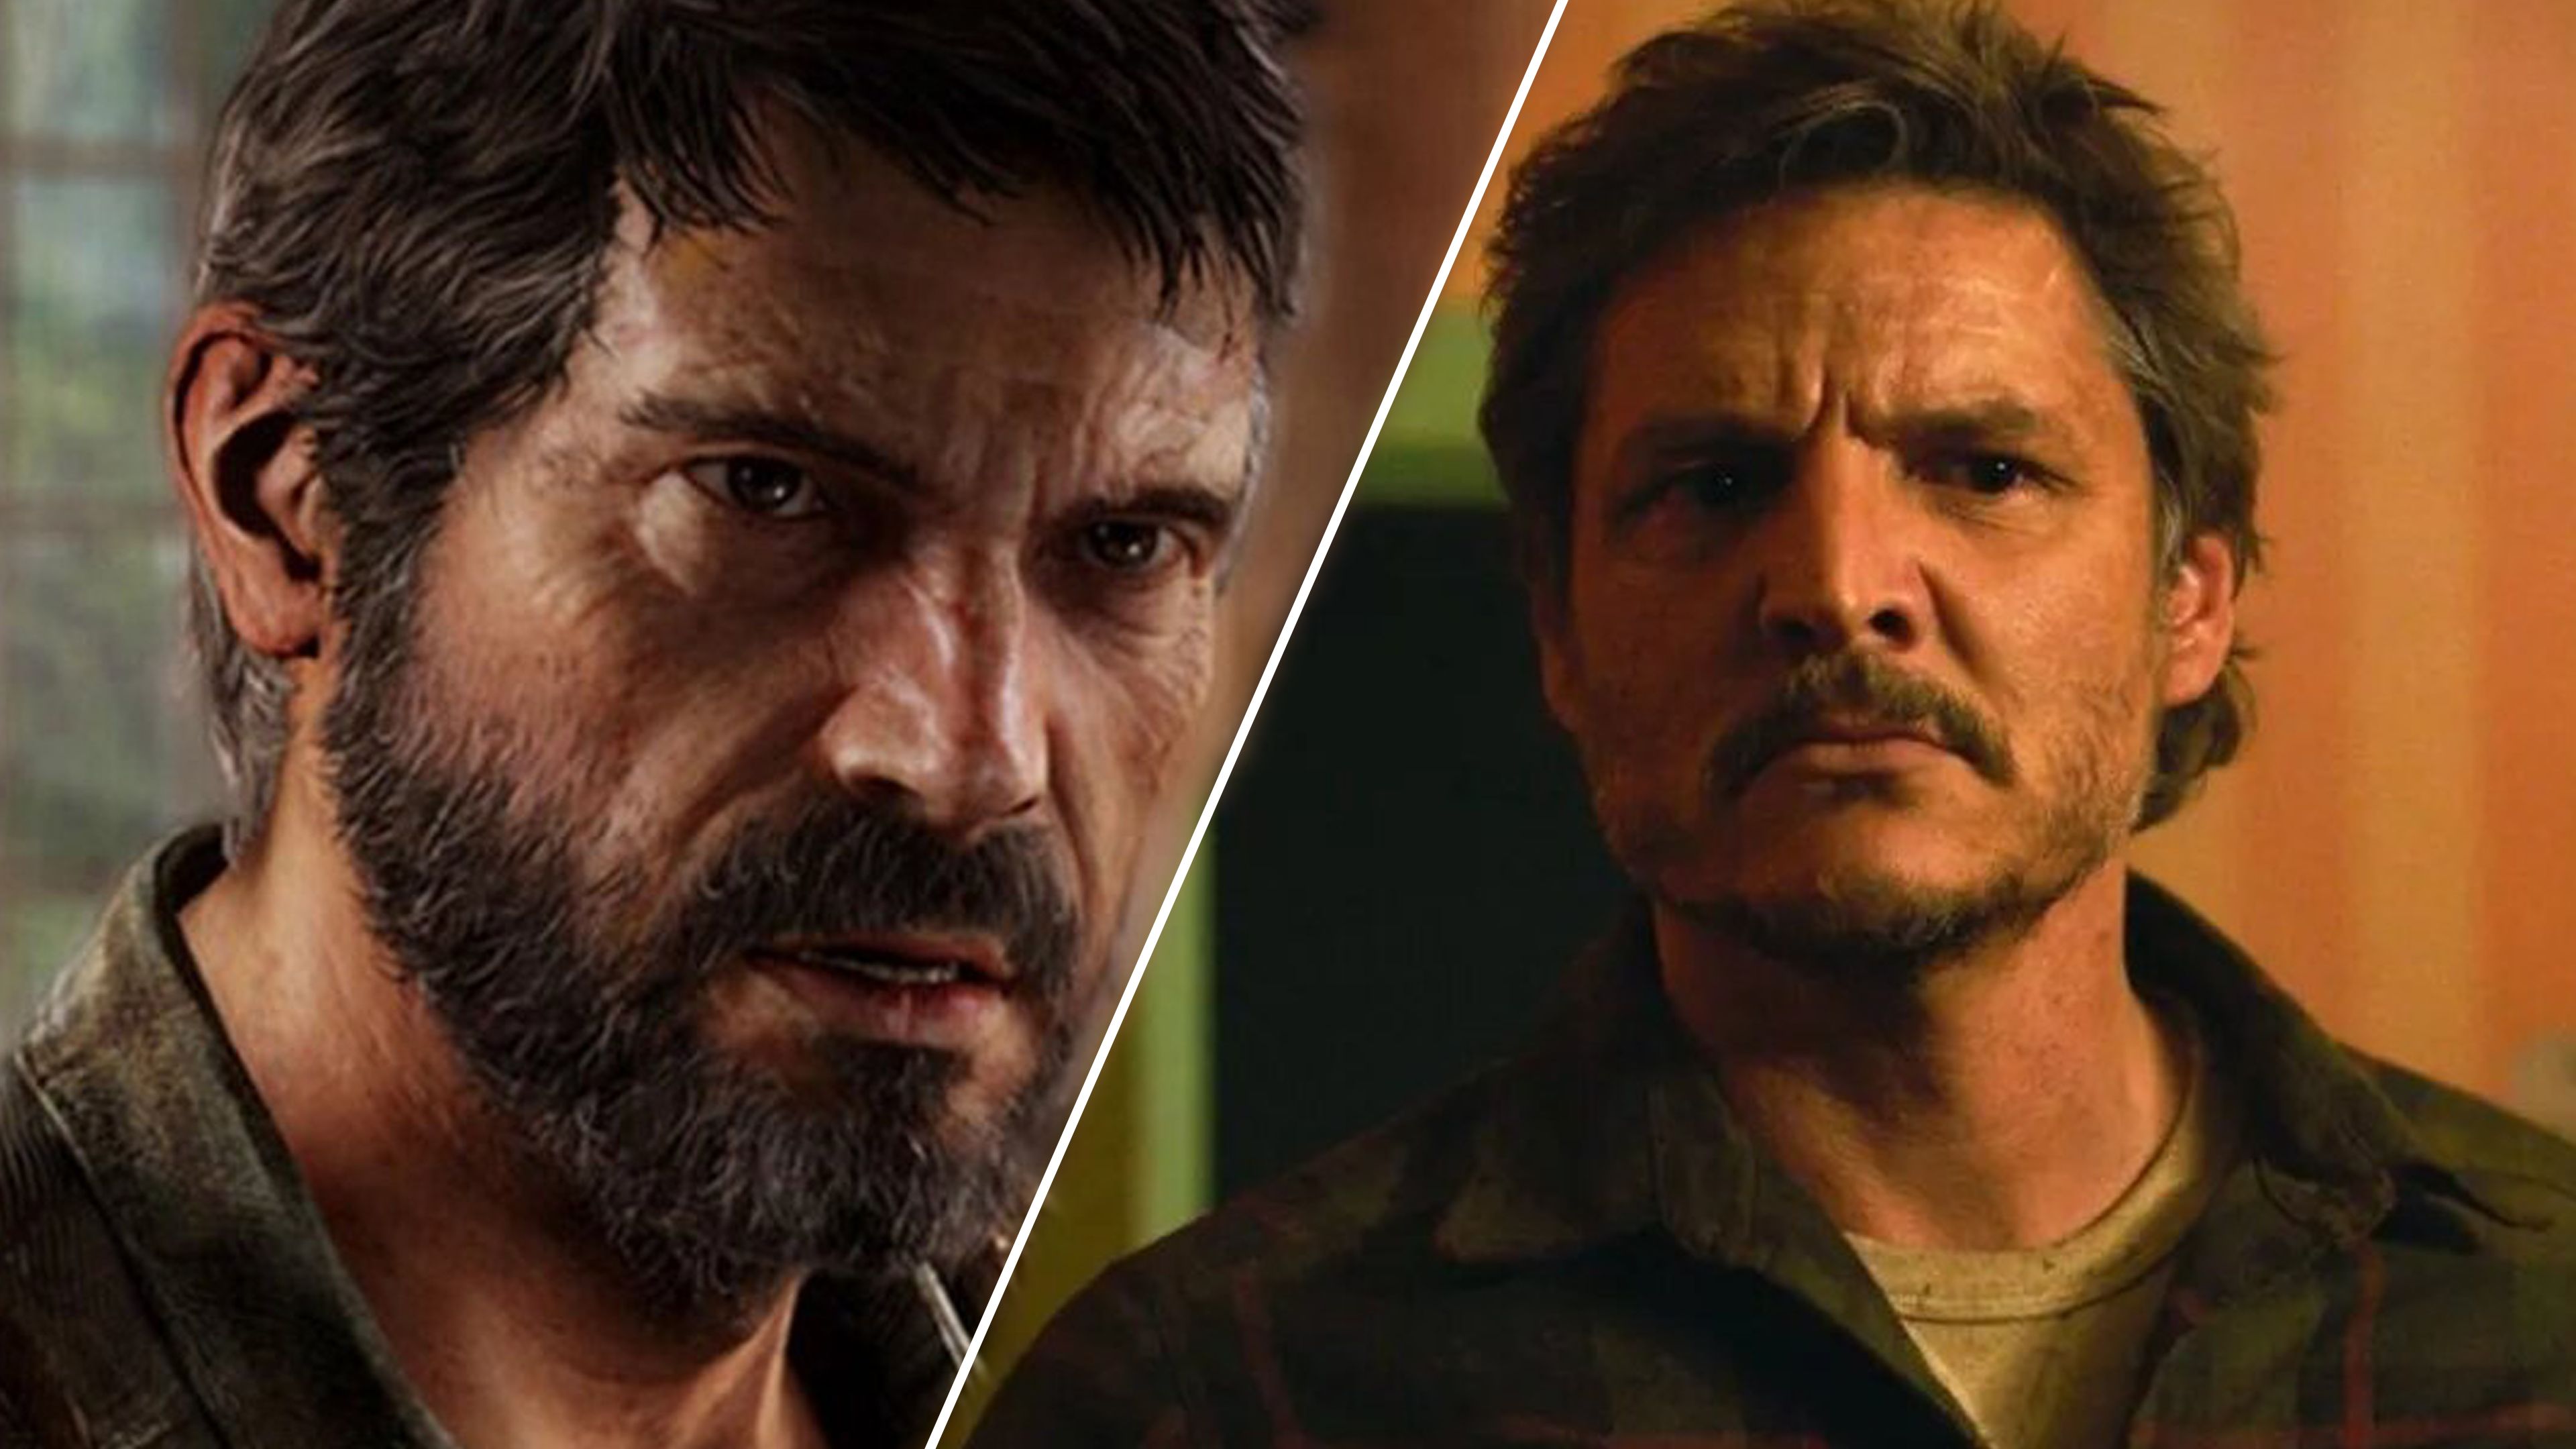 Rumores indicam que famoso ator de Game of Thrones interpretará Joel em  série de The Last of Us da HBO! - EvilHazard